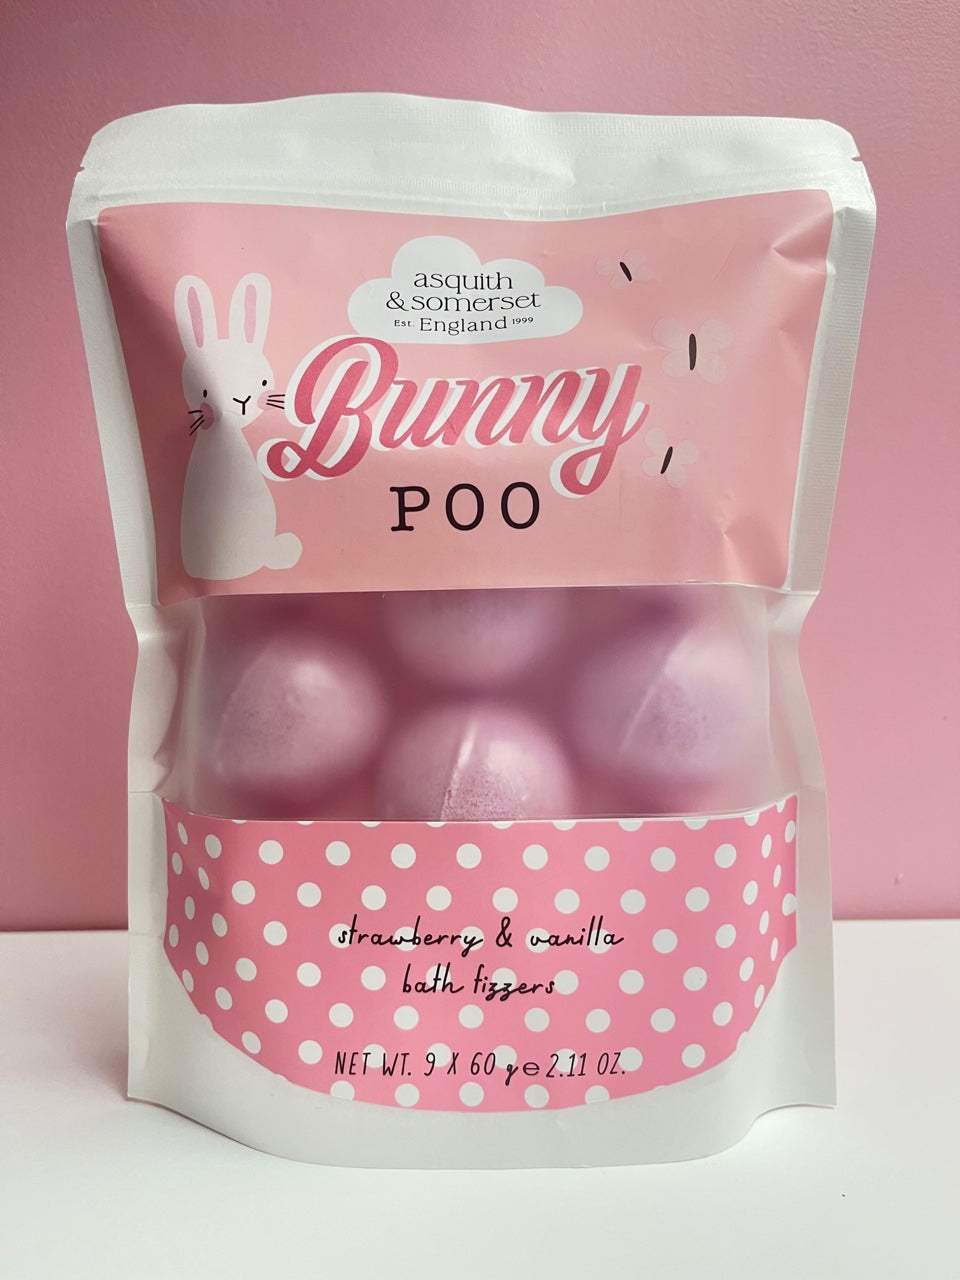 Strawberry and Vanilla Bath Fizzers "Bunny Poo"